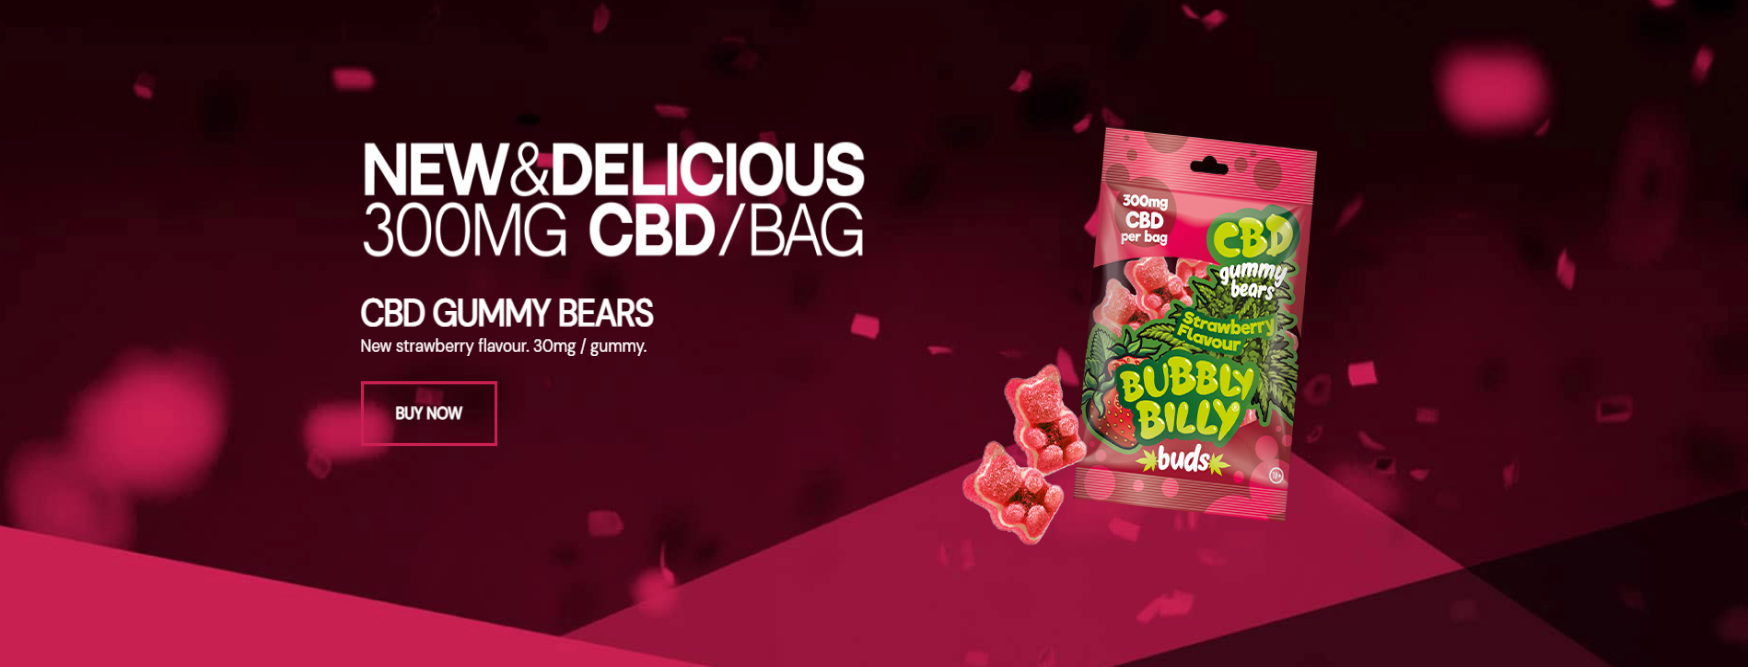 Bubbly Billy Buds Strawberry CBD Gummy Bears 300mg – 100g